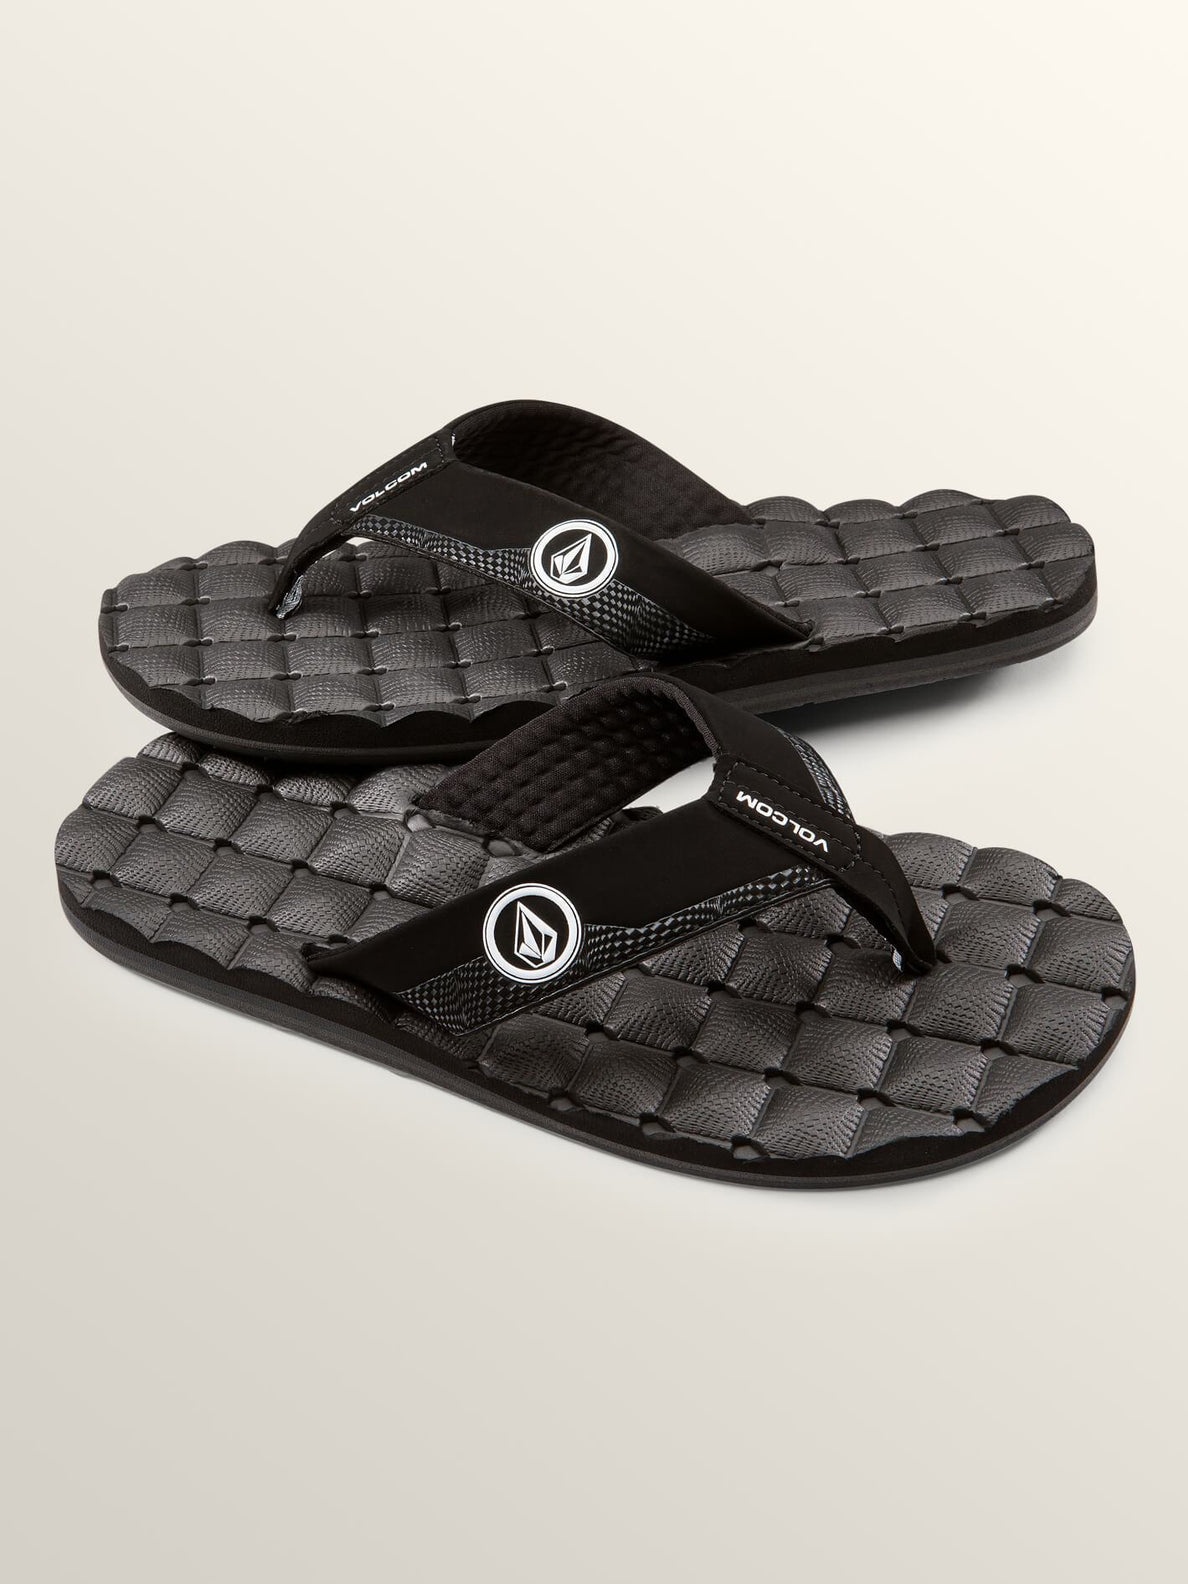 Recliner Sandals - BLACK WHITE